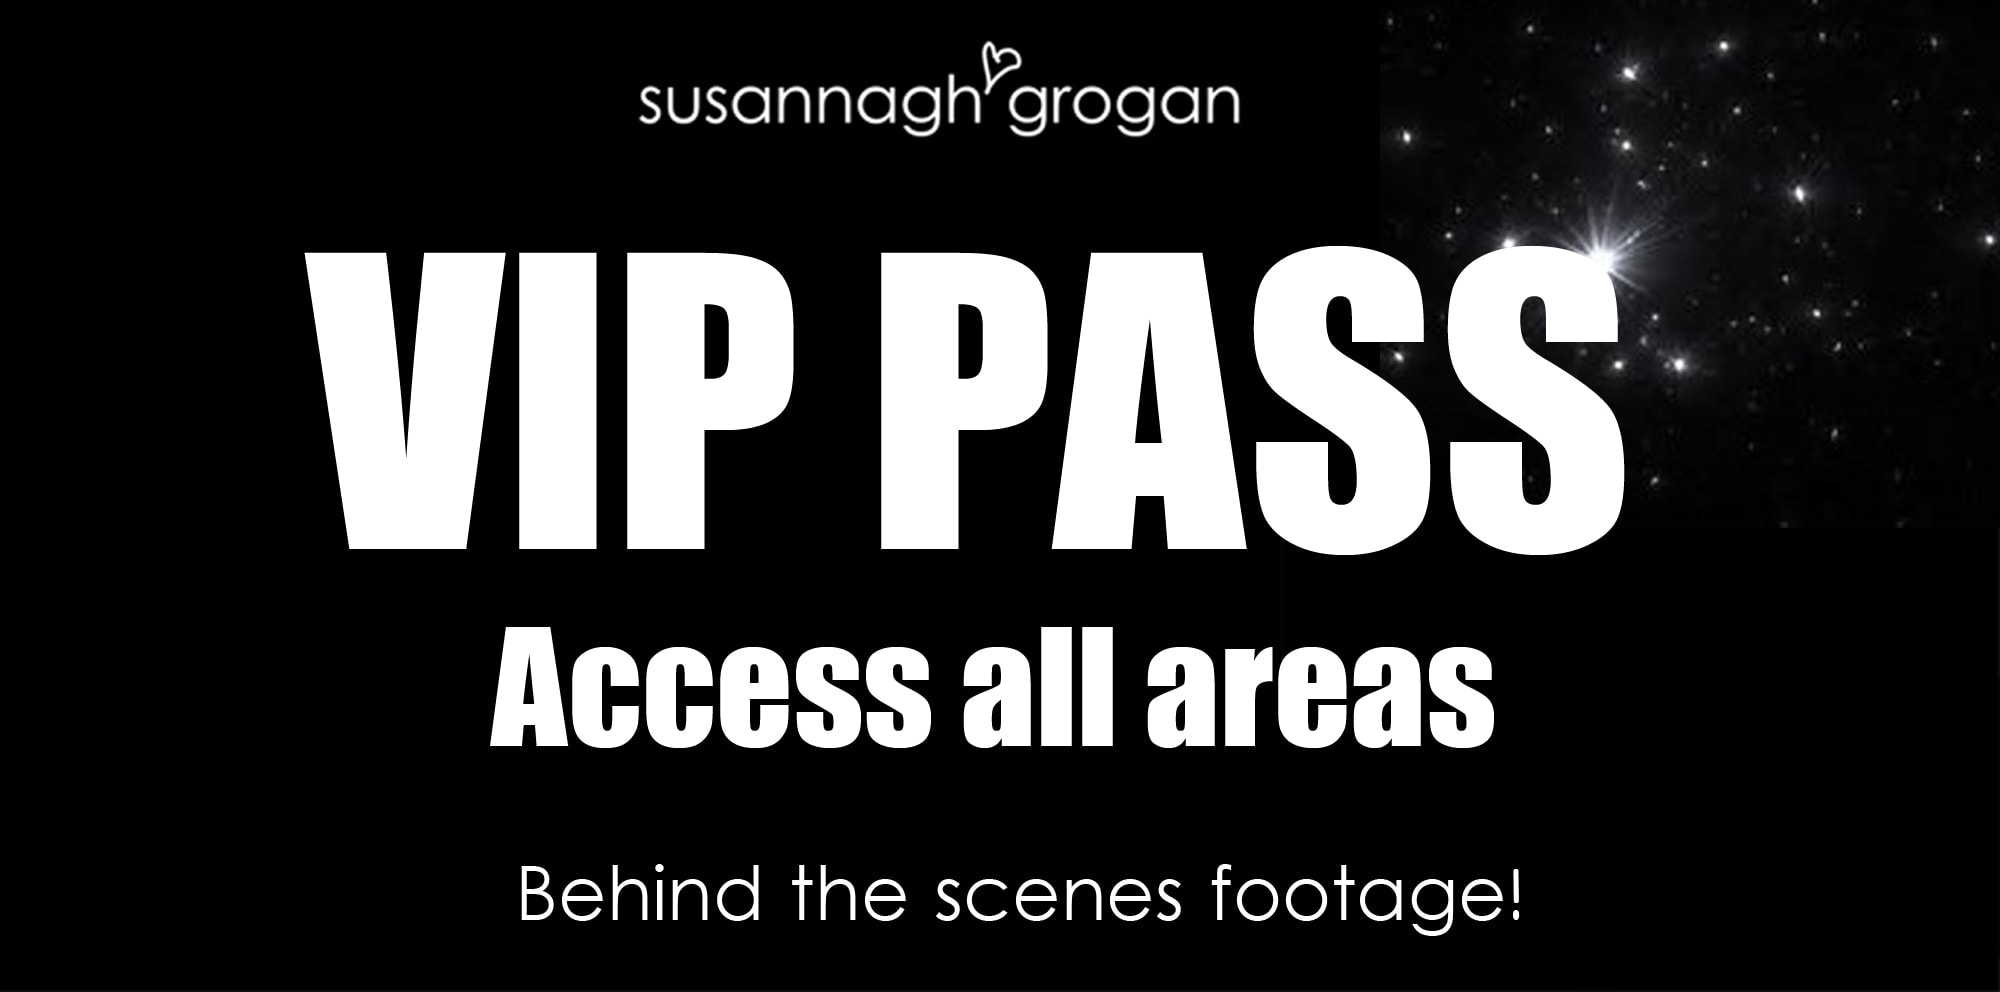 Susannagh Grogan Videos